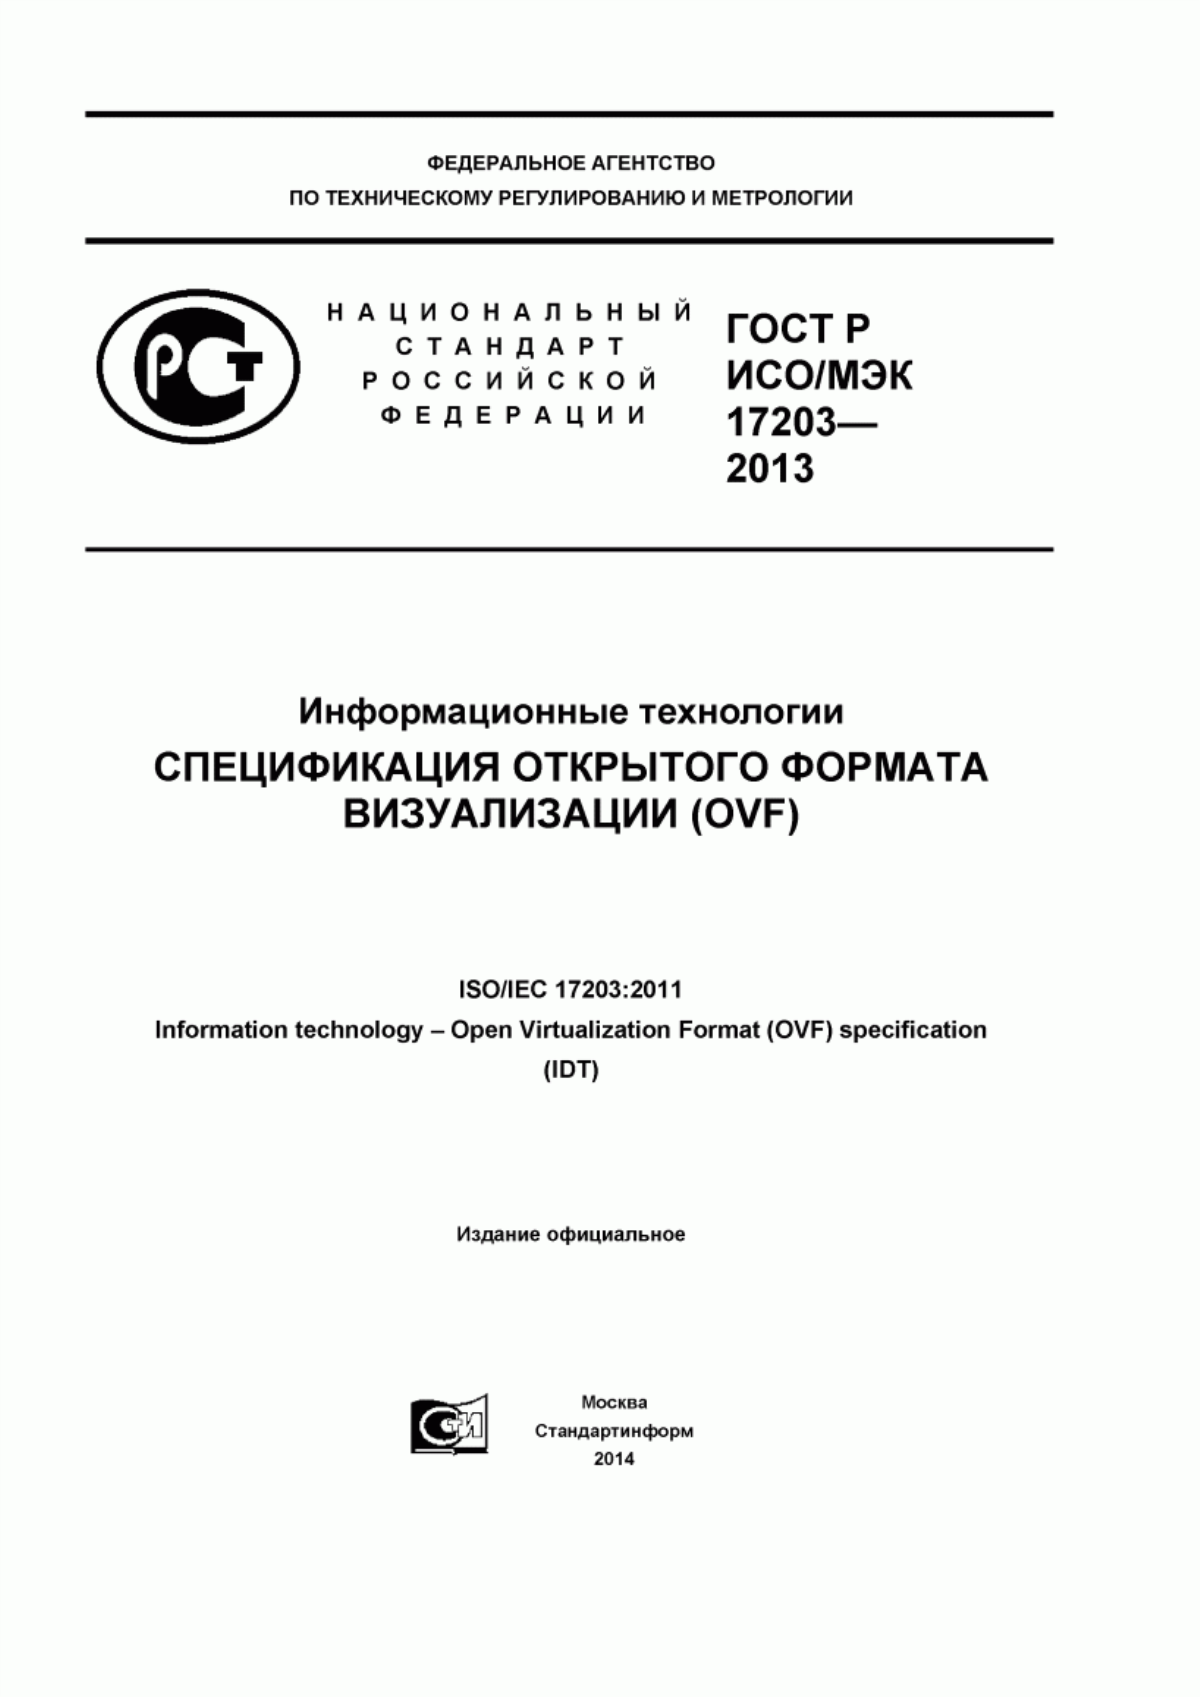 ГОСТ Р ИСО/МЭК 17203-2013 Информационная технология. Спецификация открытого формата визуализации (OVF)